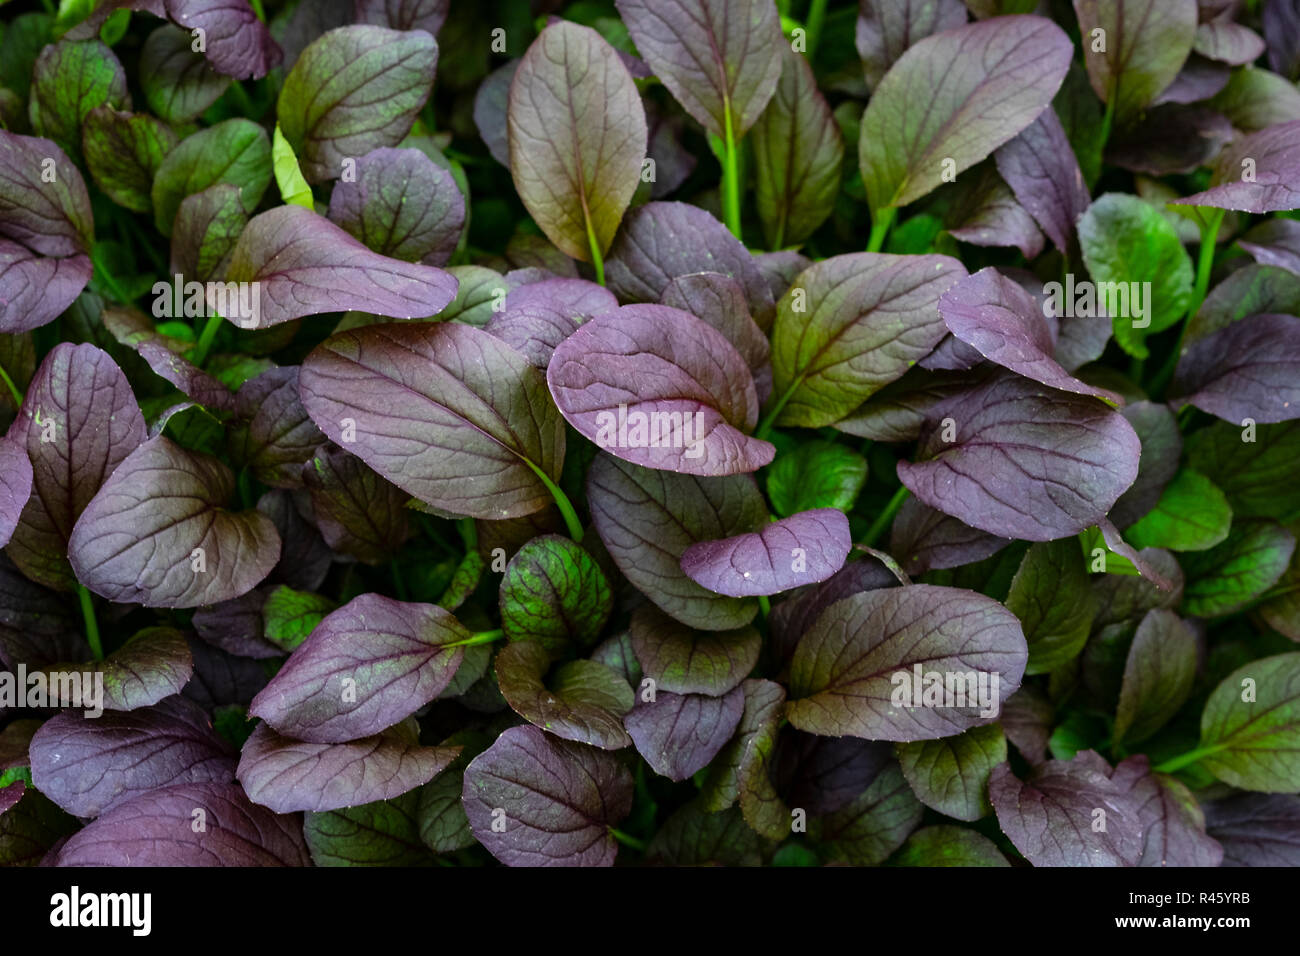 Pak choi baby leaf salad growing Stock Photo